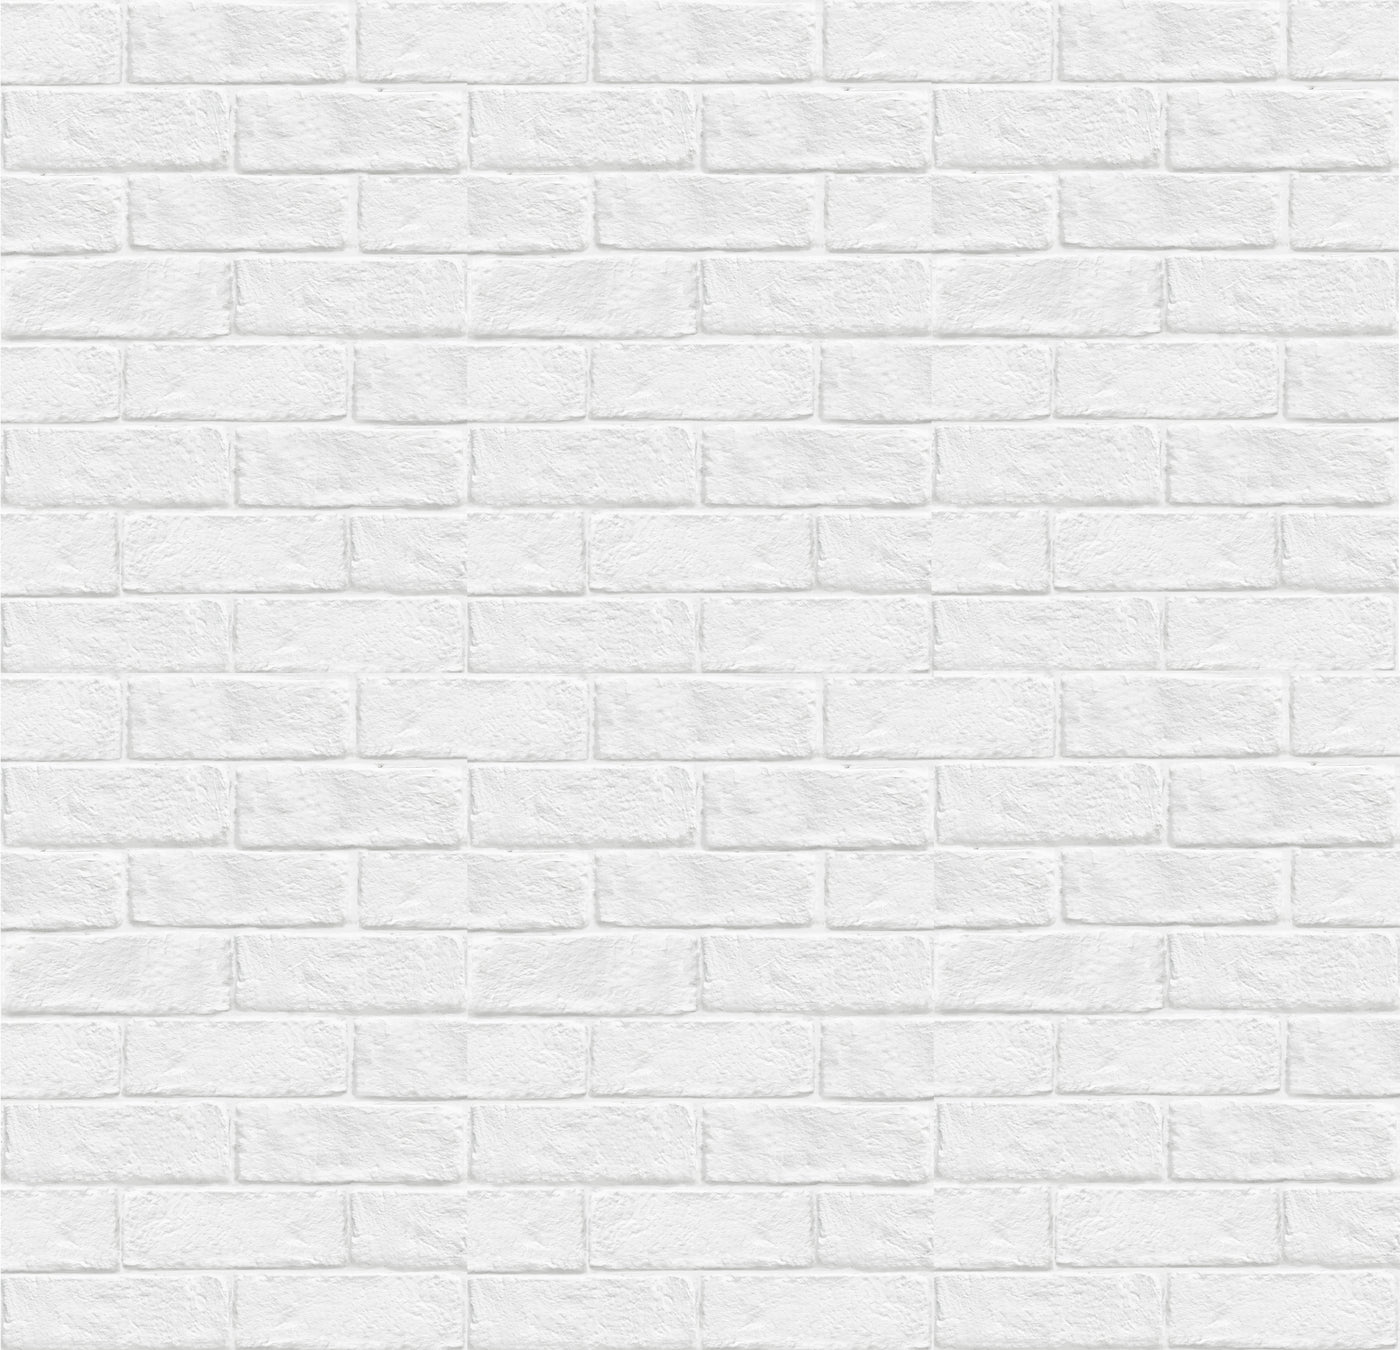 White Brick Wallpaper Sheets